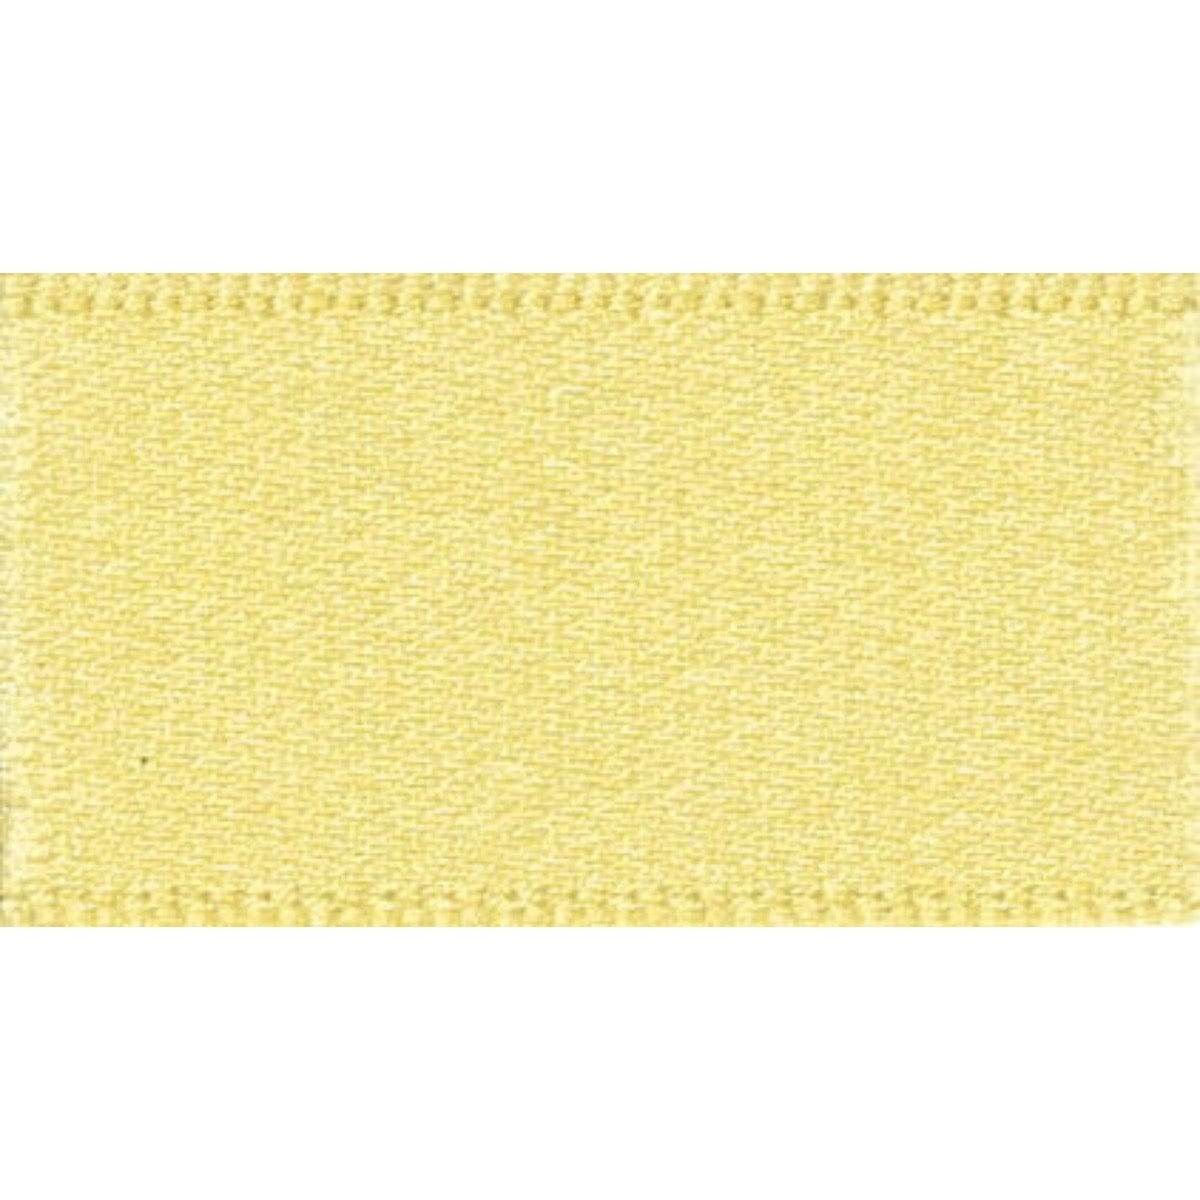 Double Faced Satin Ribbon Lemon Yellow: 25mm wide. Price per metre.